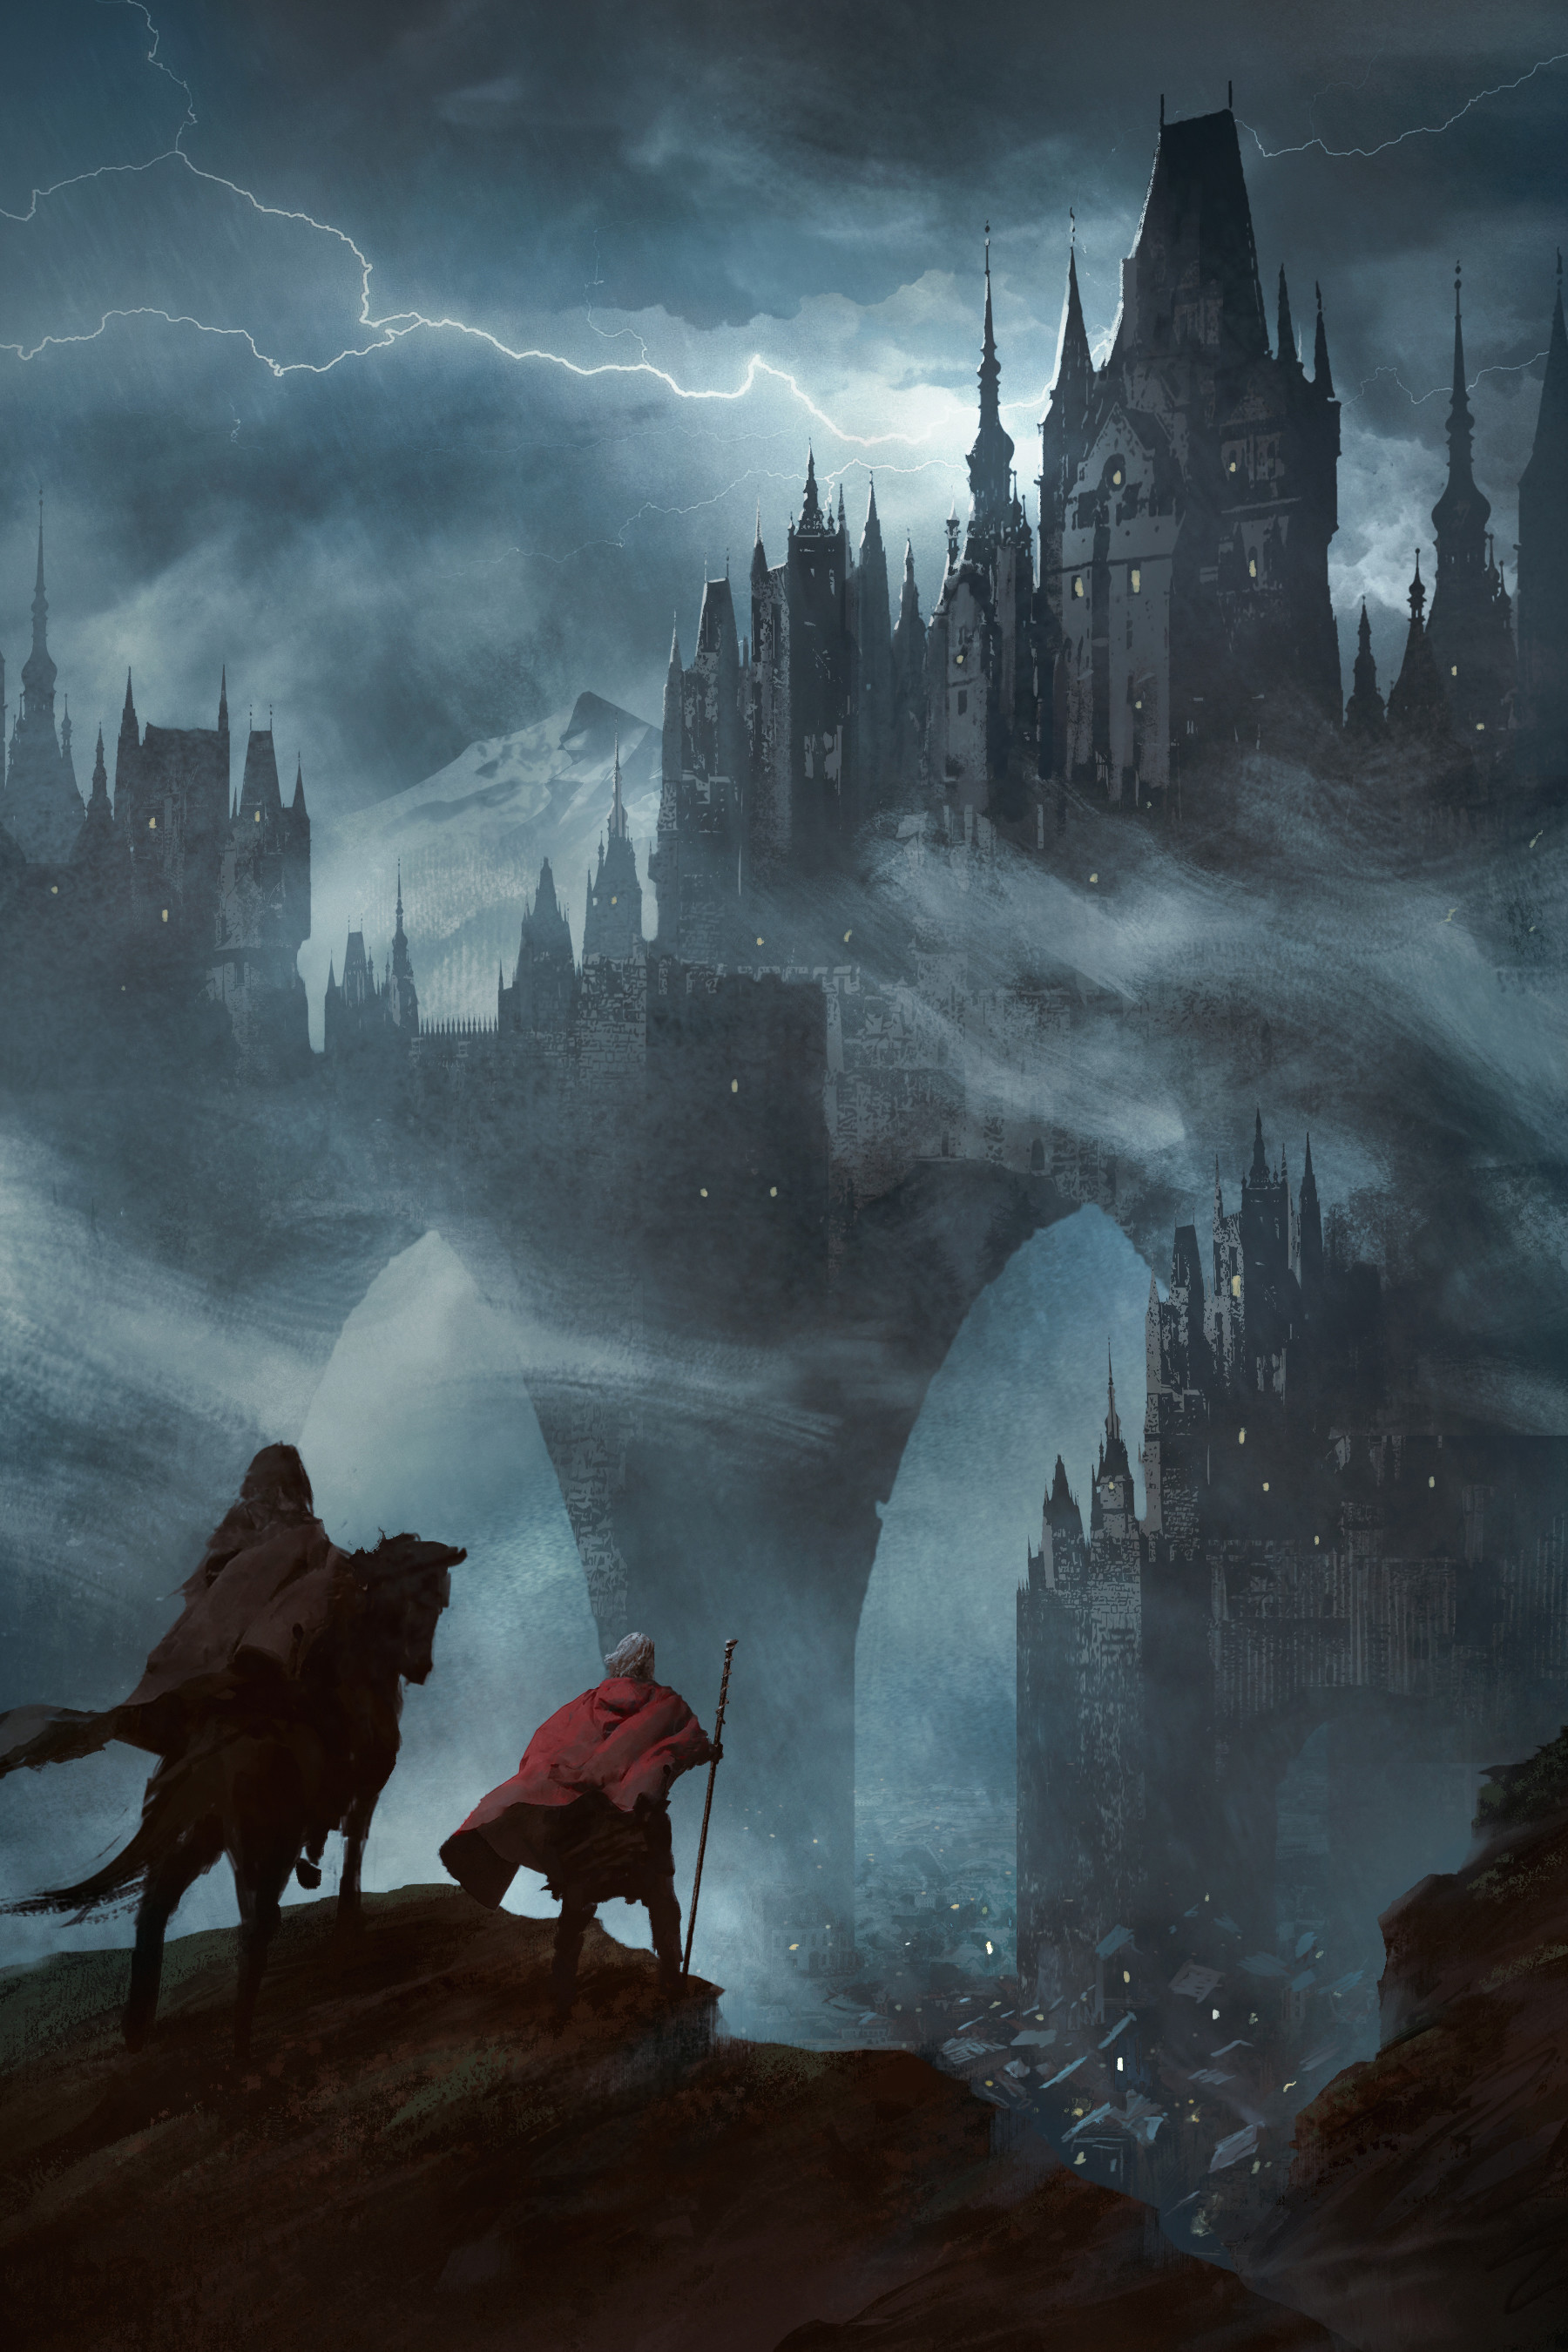 Iluminada - Dark Fantasy artwork for Book Cover by Wesley-Souza on